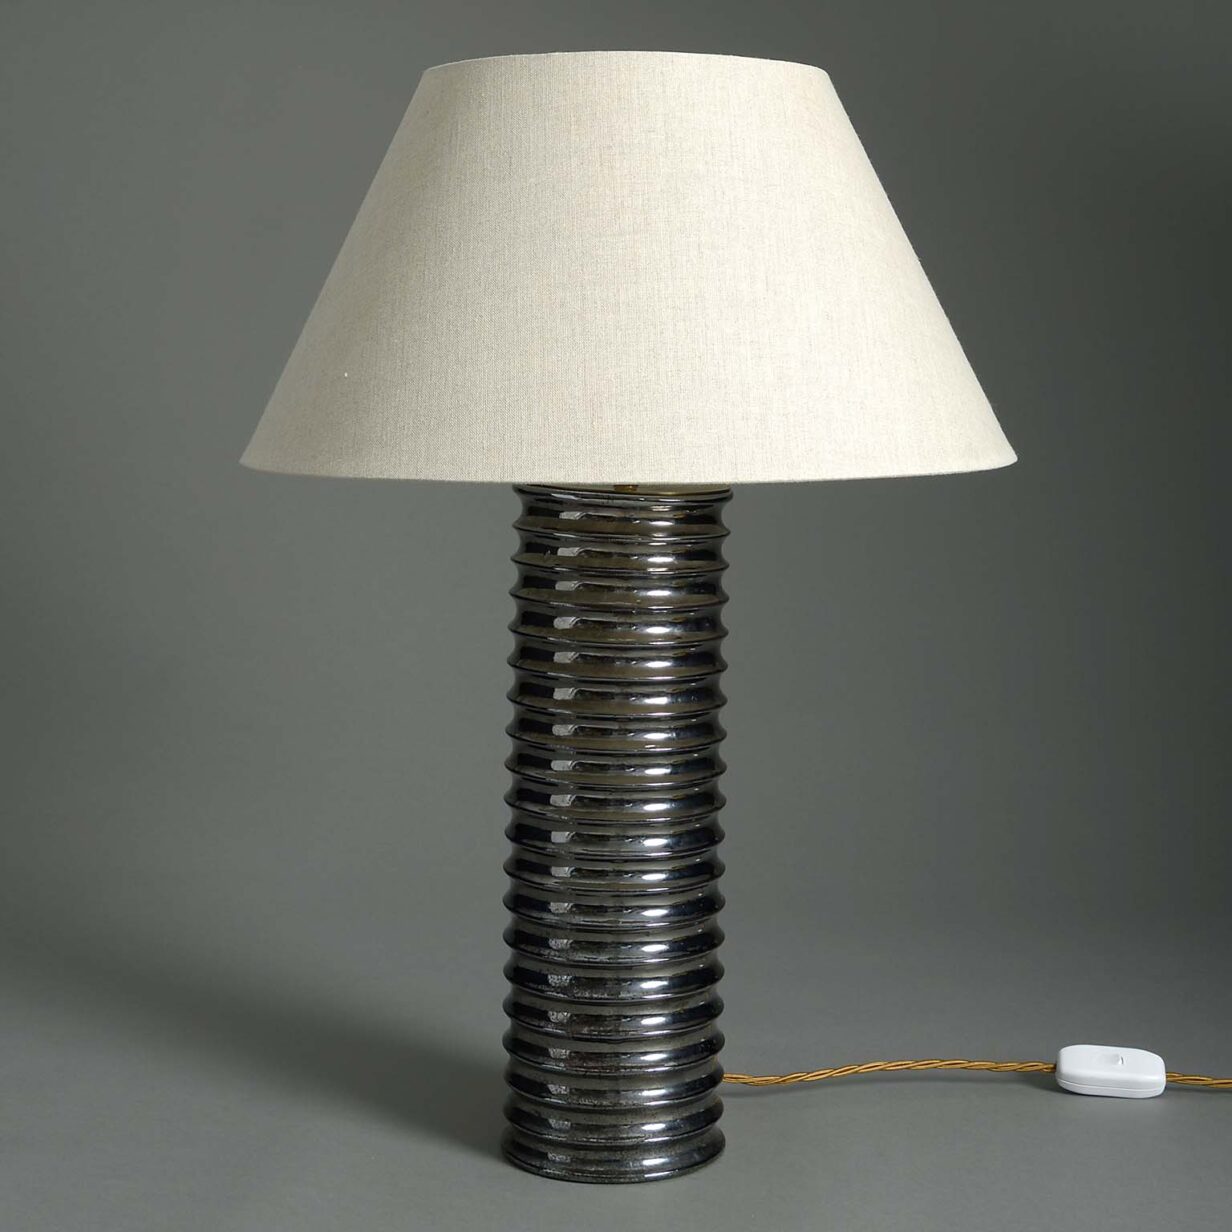 Cork screw lamp